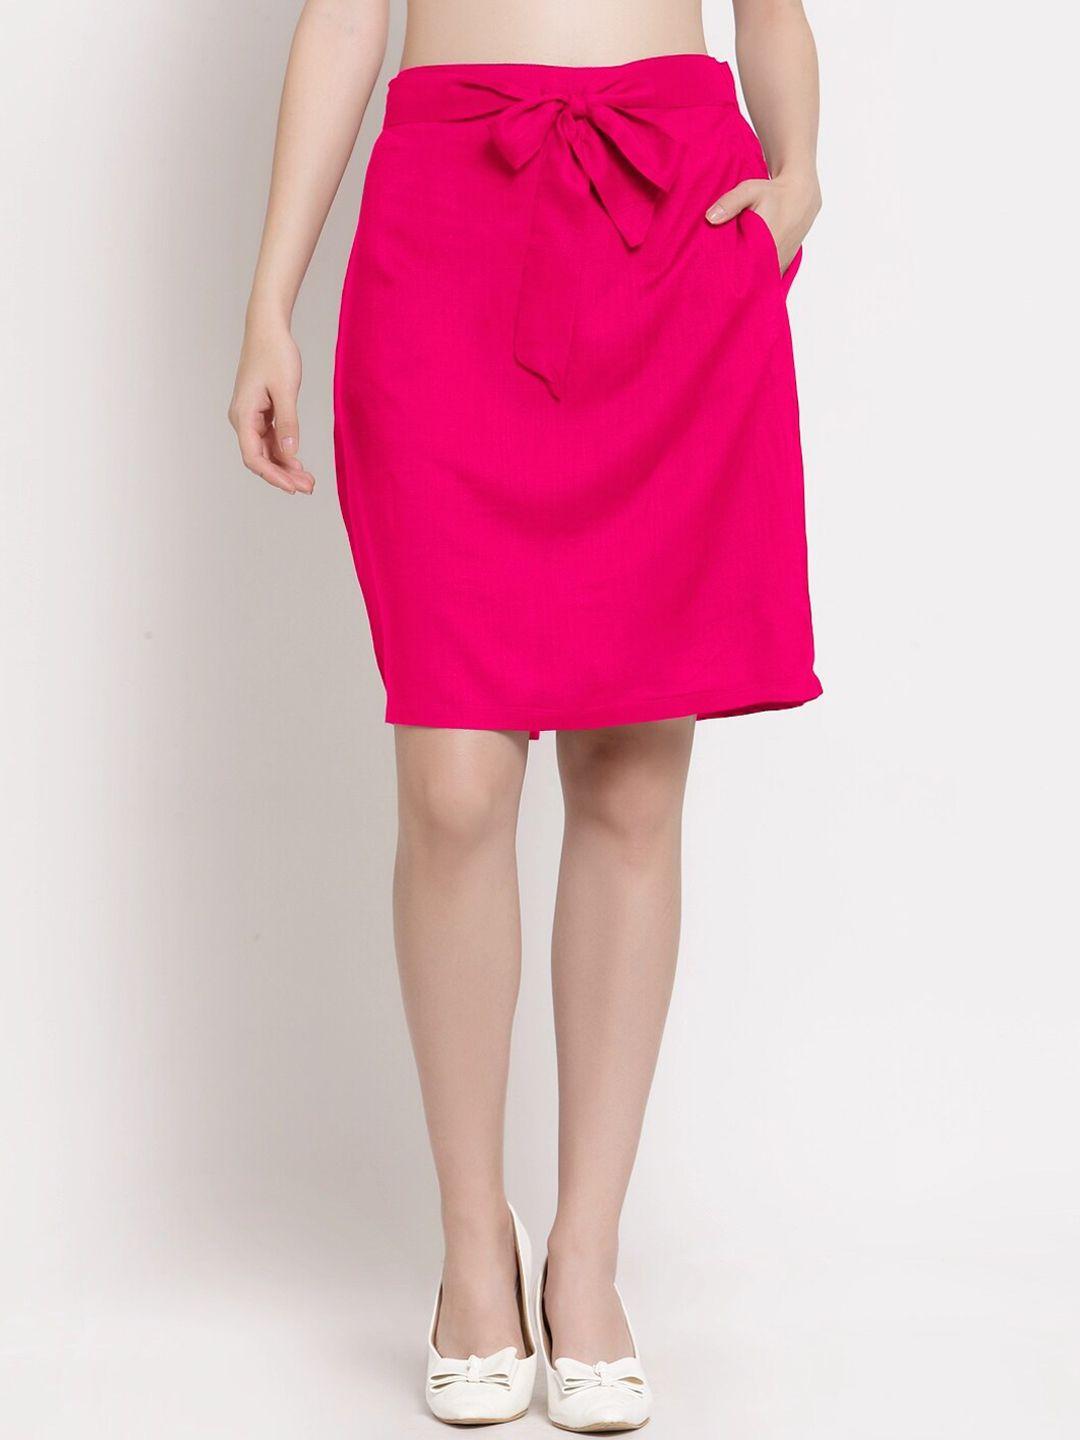 patrorna women fuchsia pink solid pencil skirt